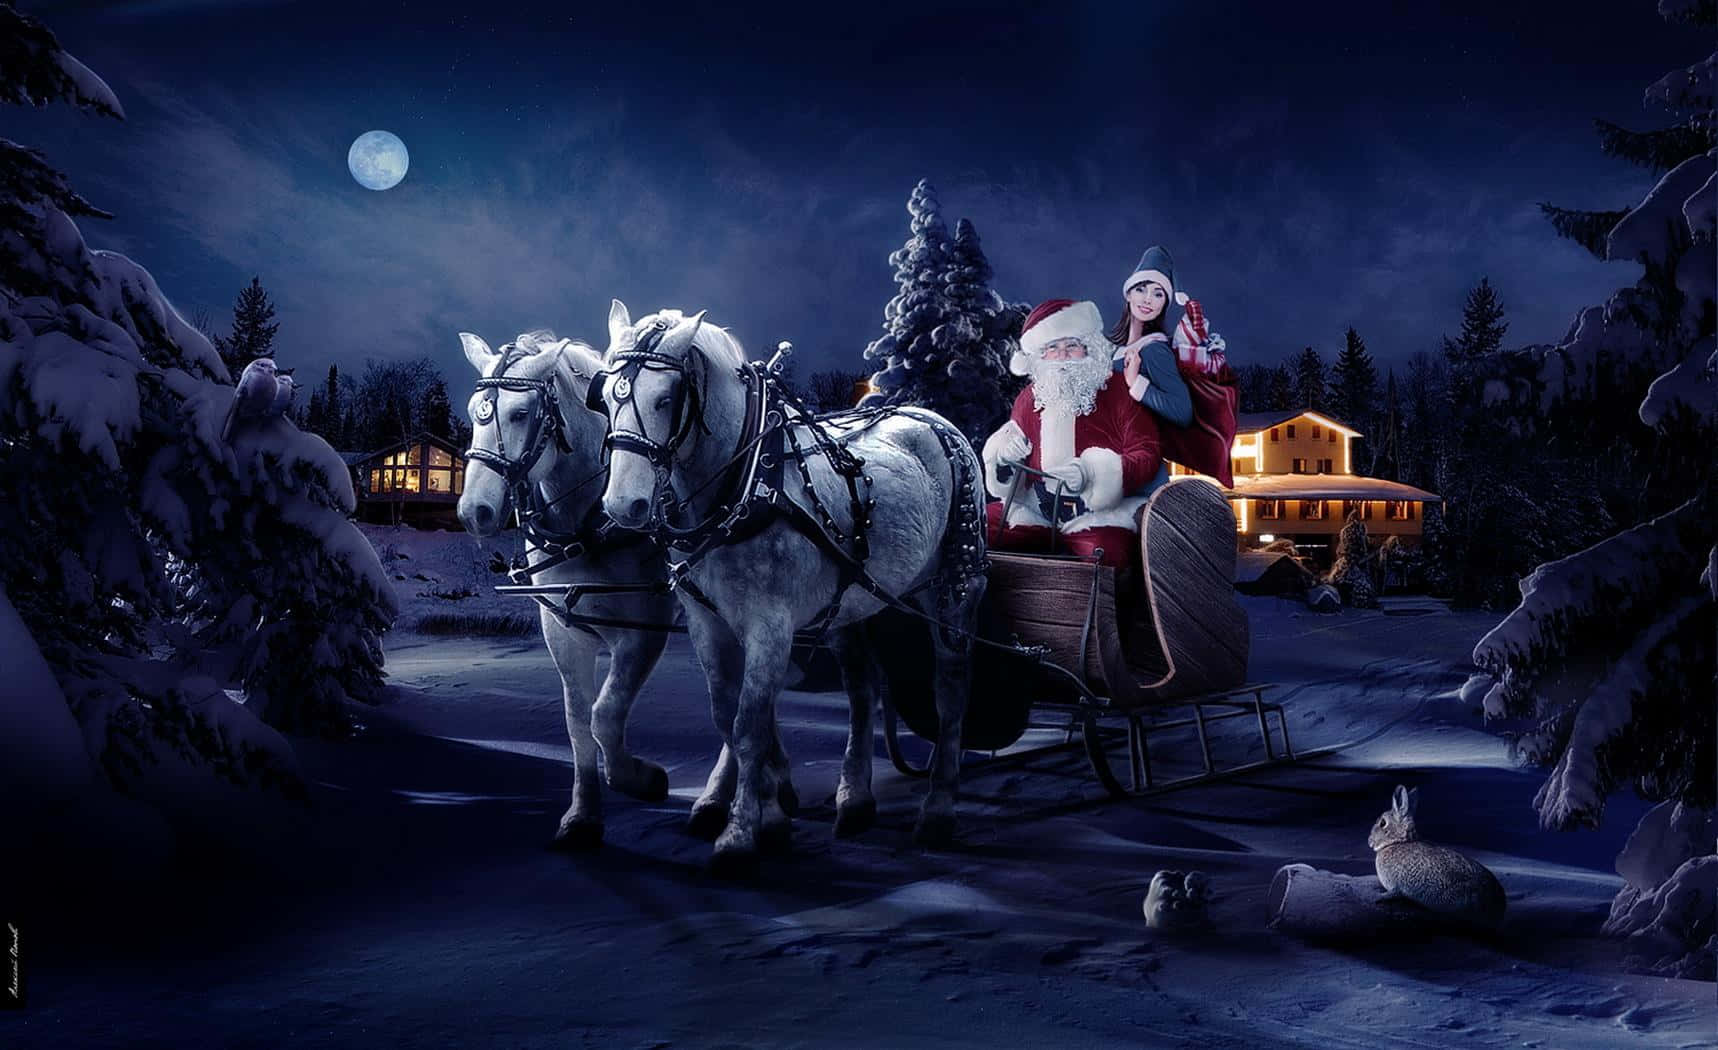 Santa Claus Riding His Sleigh in a Snowy Winter Night